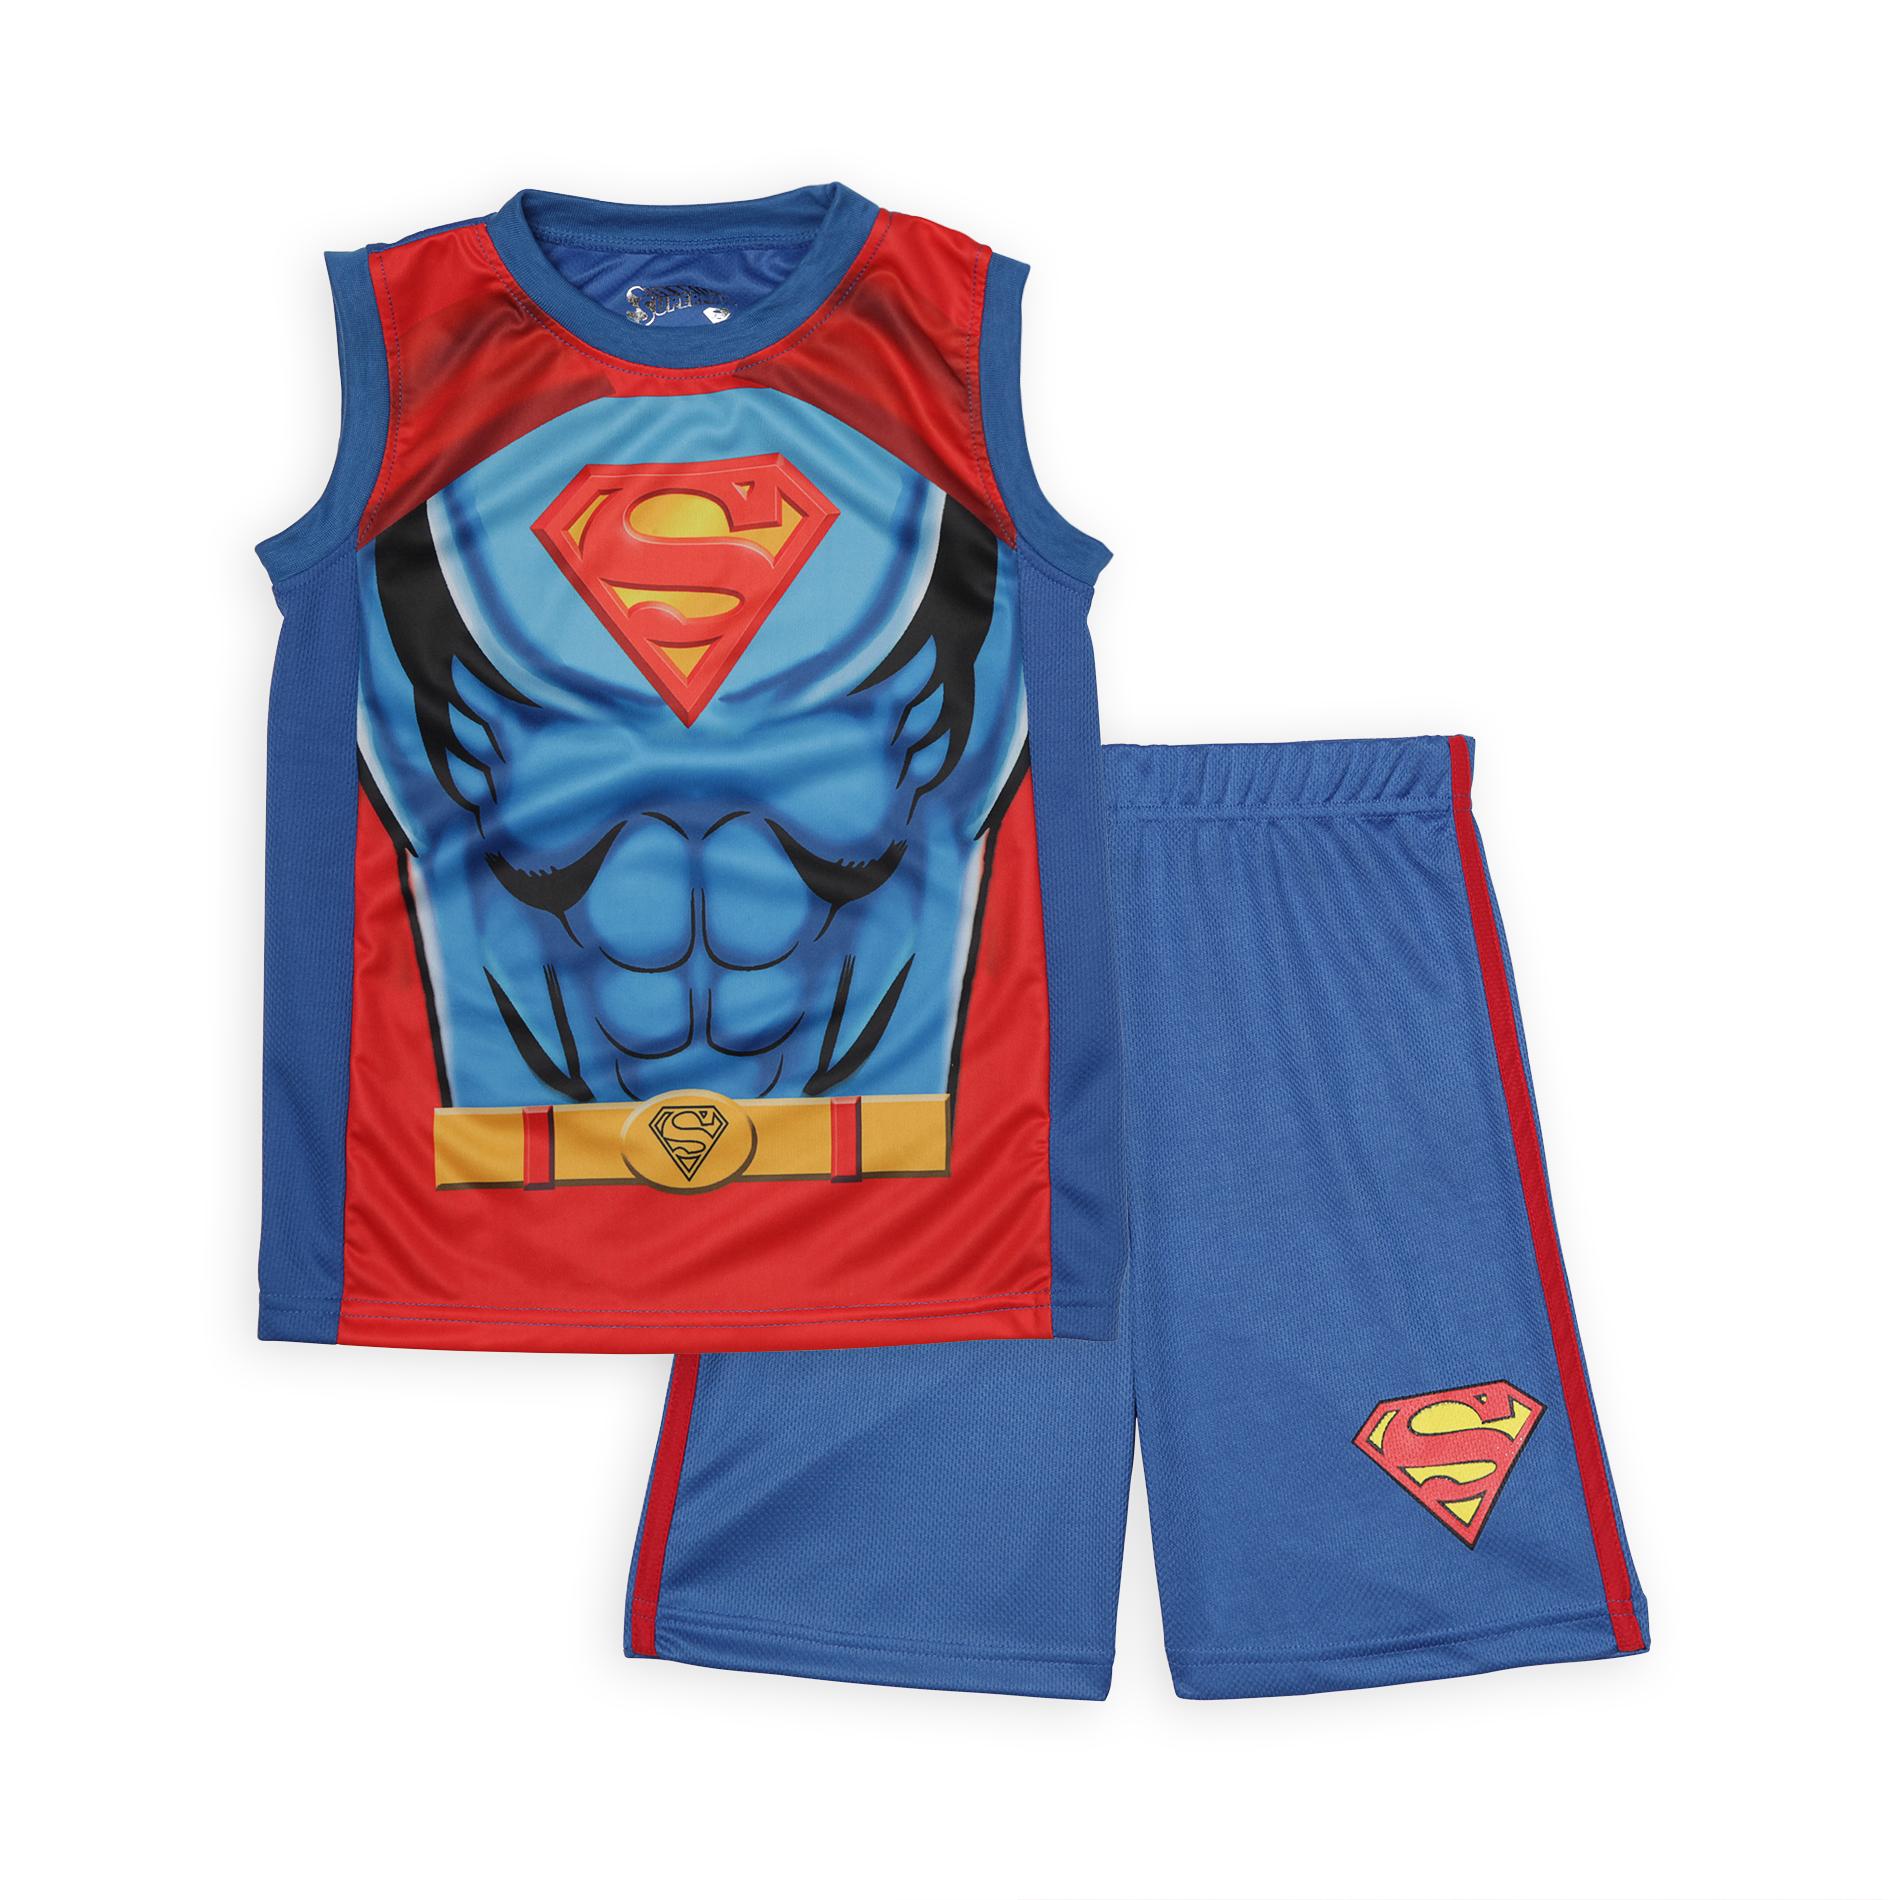 DC Comics Boy's Graphic Muscle Shirt & Shorts - Superman